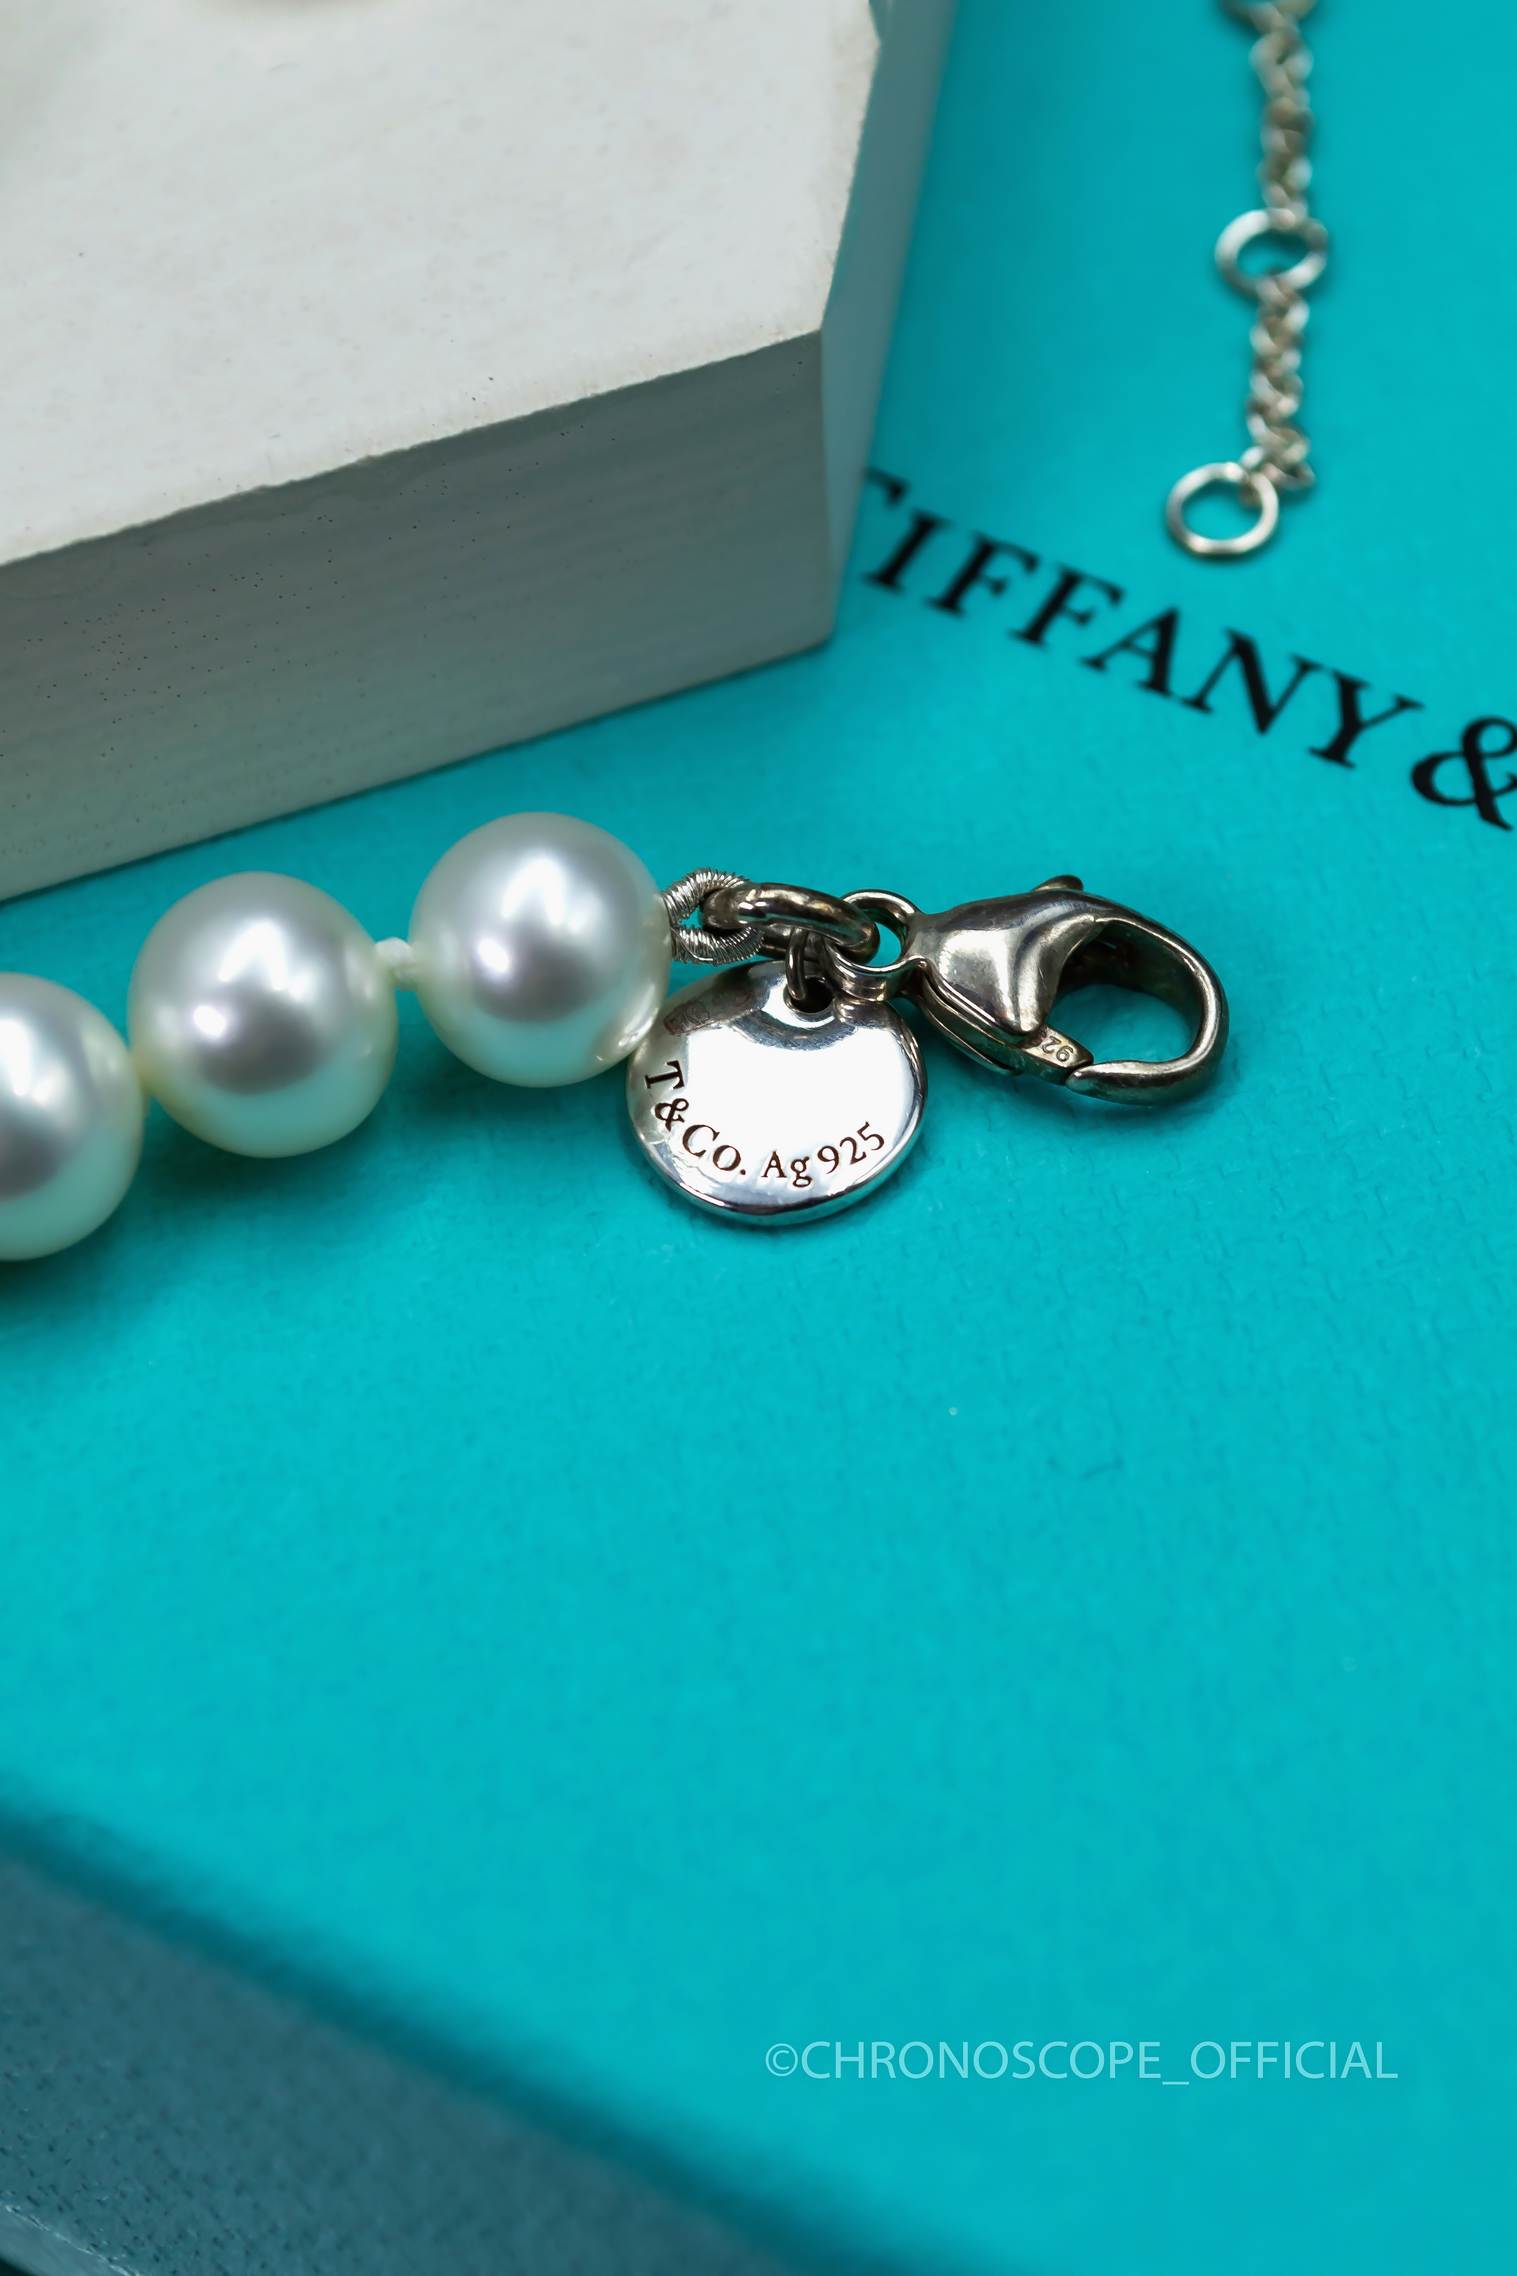 Tiffany&nbsp;&nbsp;-&nbsp;&nbsp;Olive Leaf Pearl Heart Bracelet - Tiffany & Co